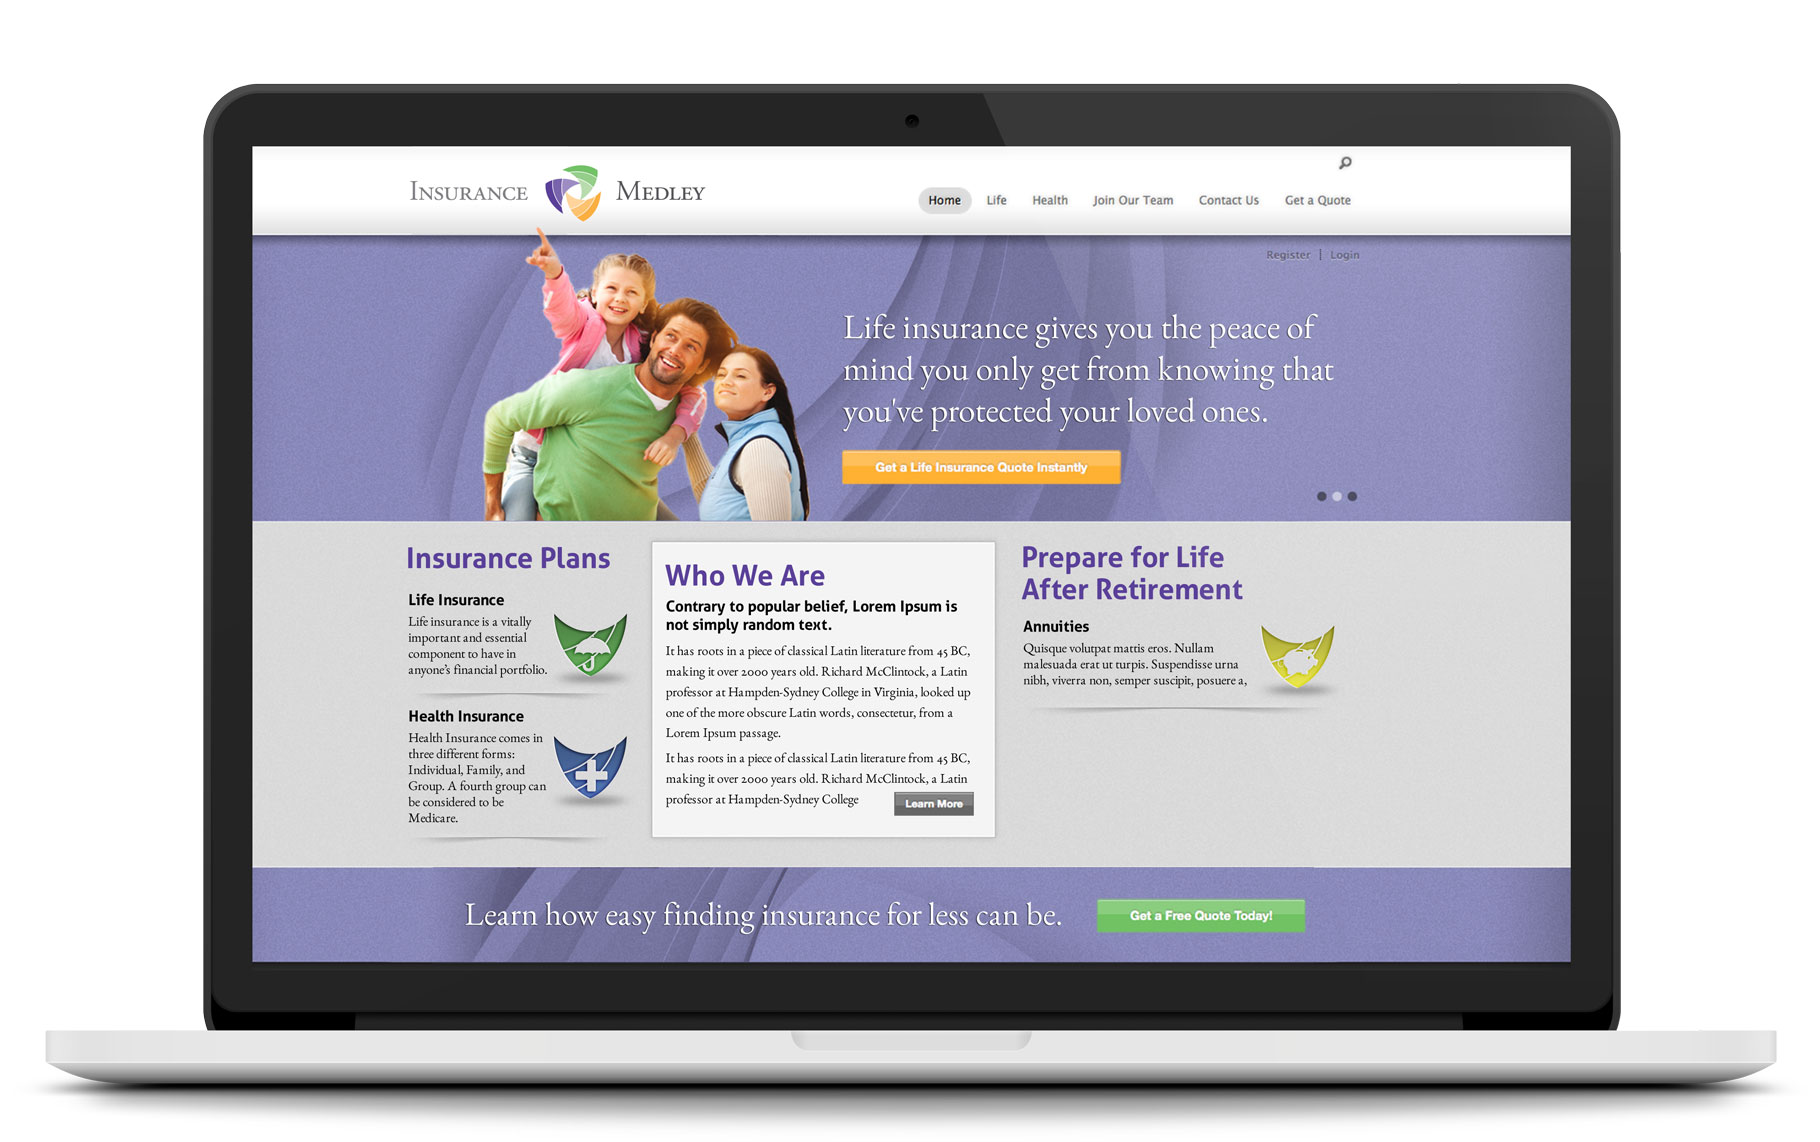 Insurance Medley Website Design